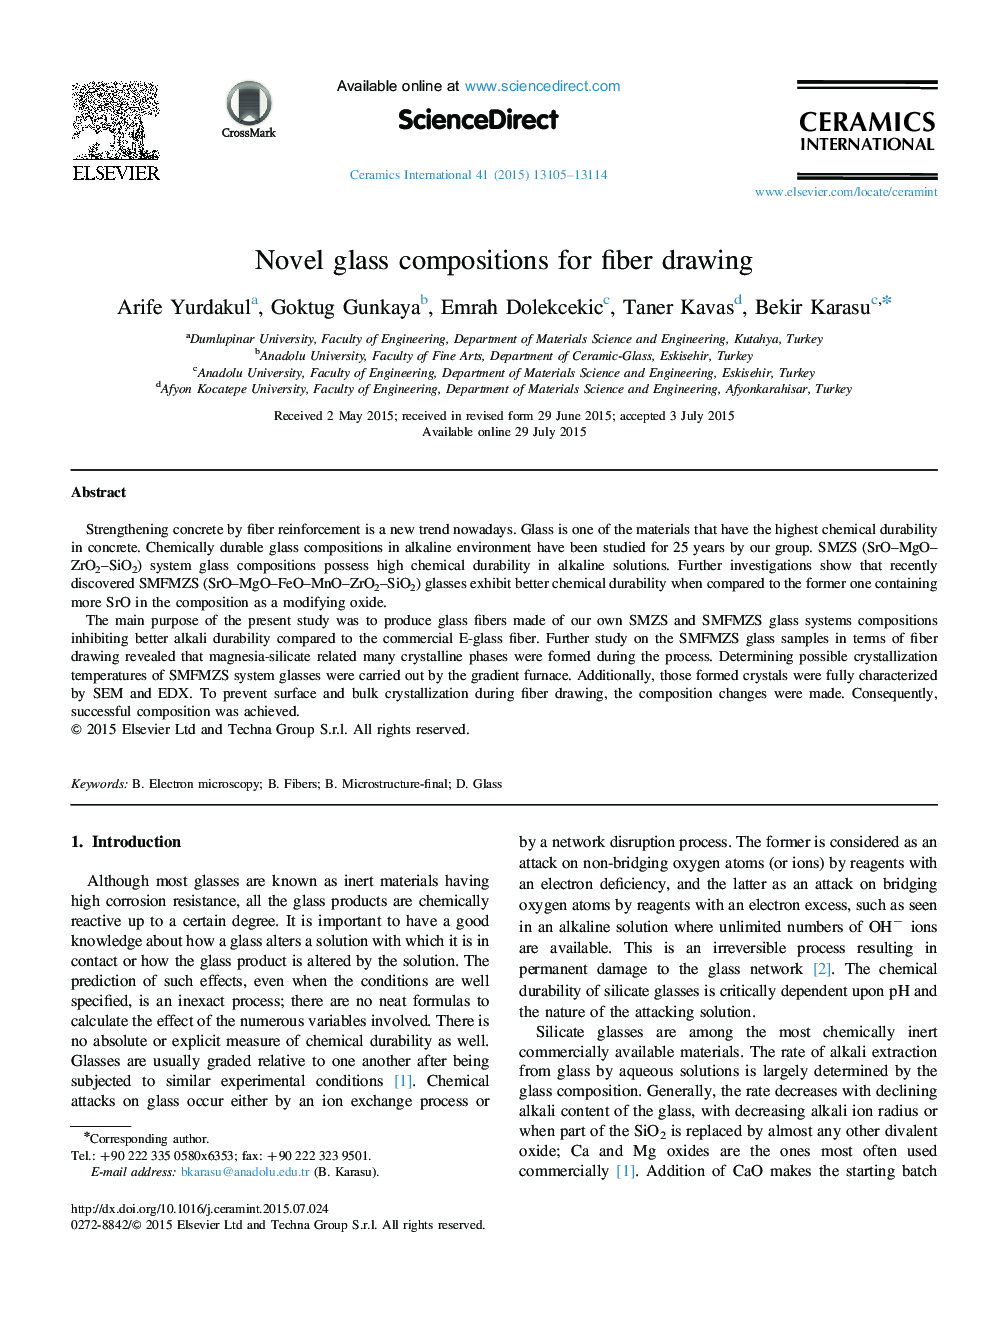 Novel glass compositions for fiber drawing